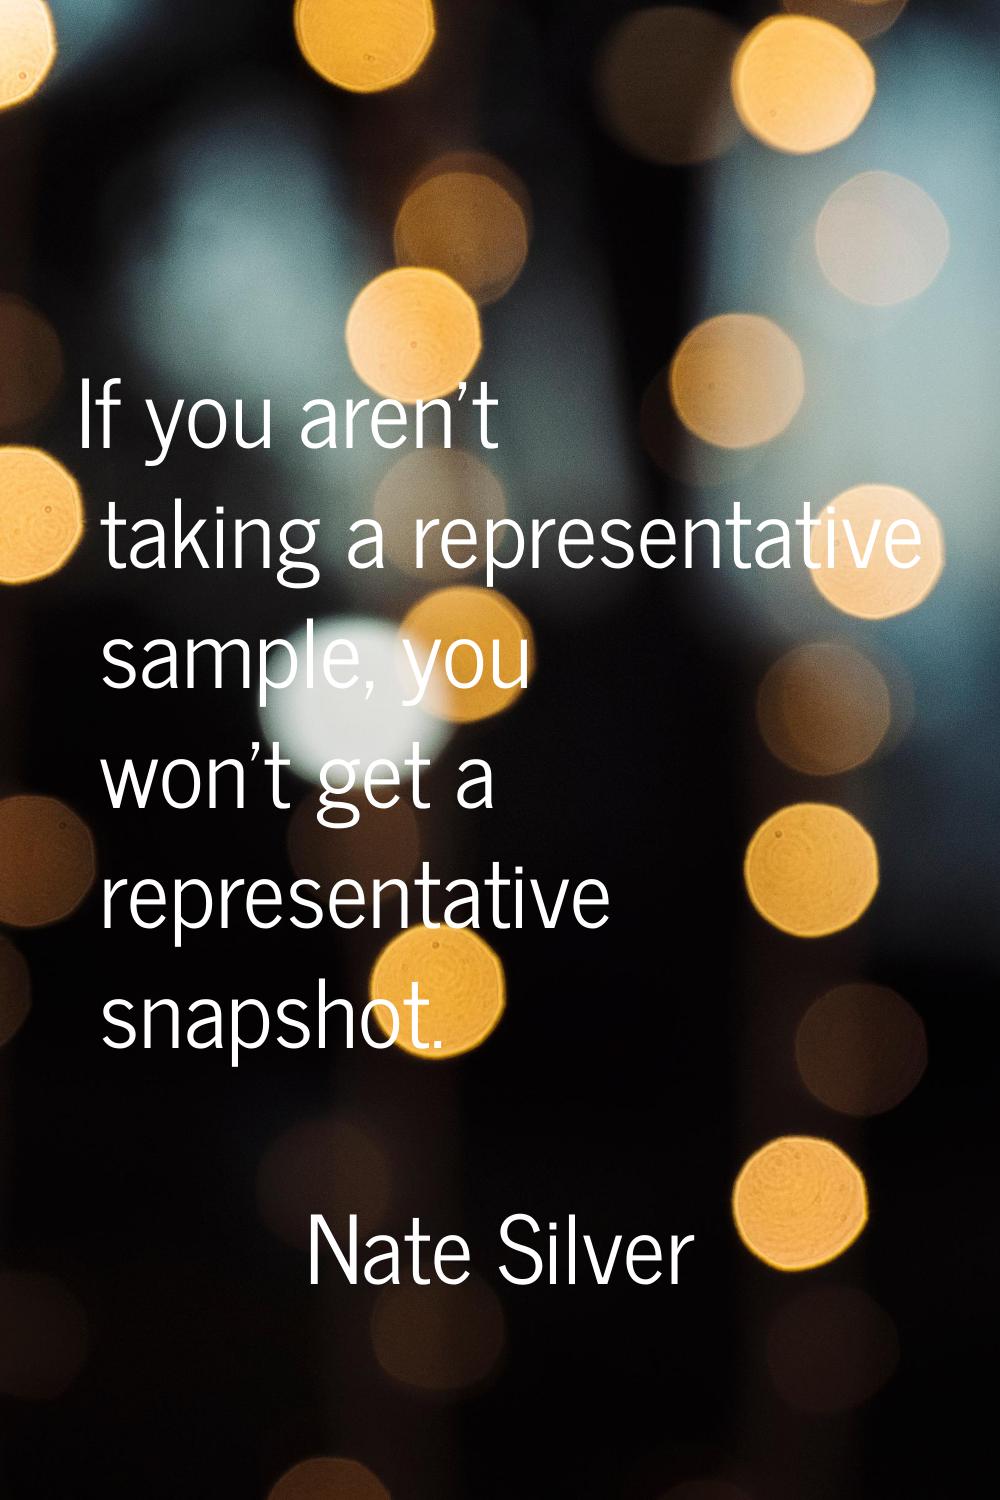 If you aren't taking a representative sample, you won't get a representative snapshot.